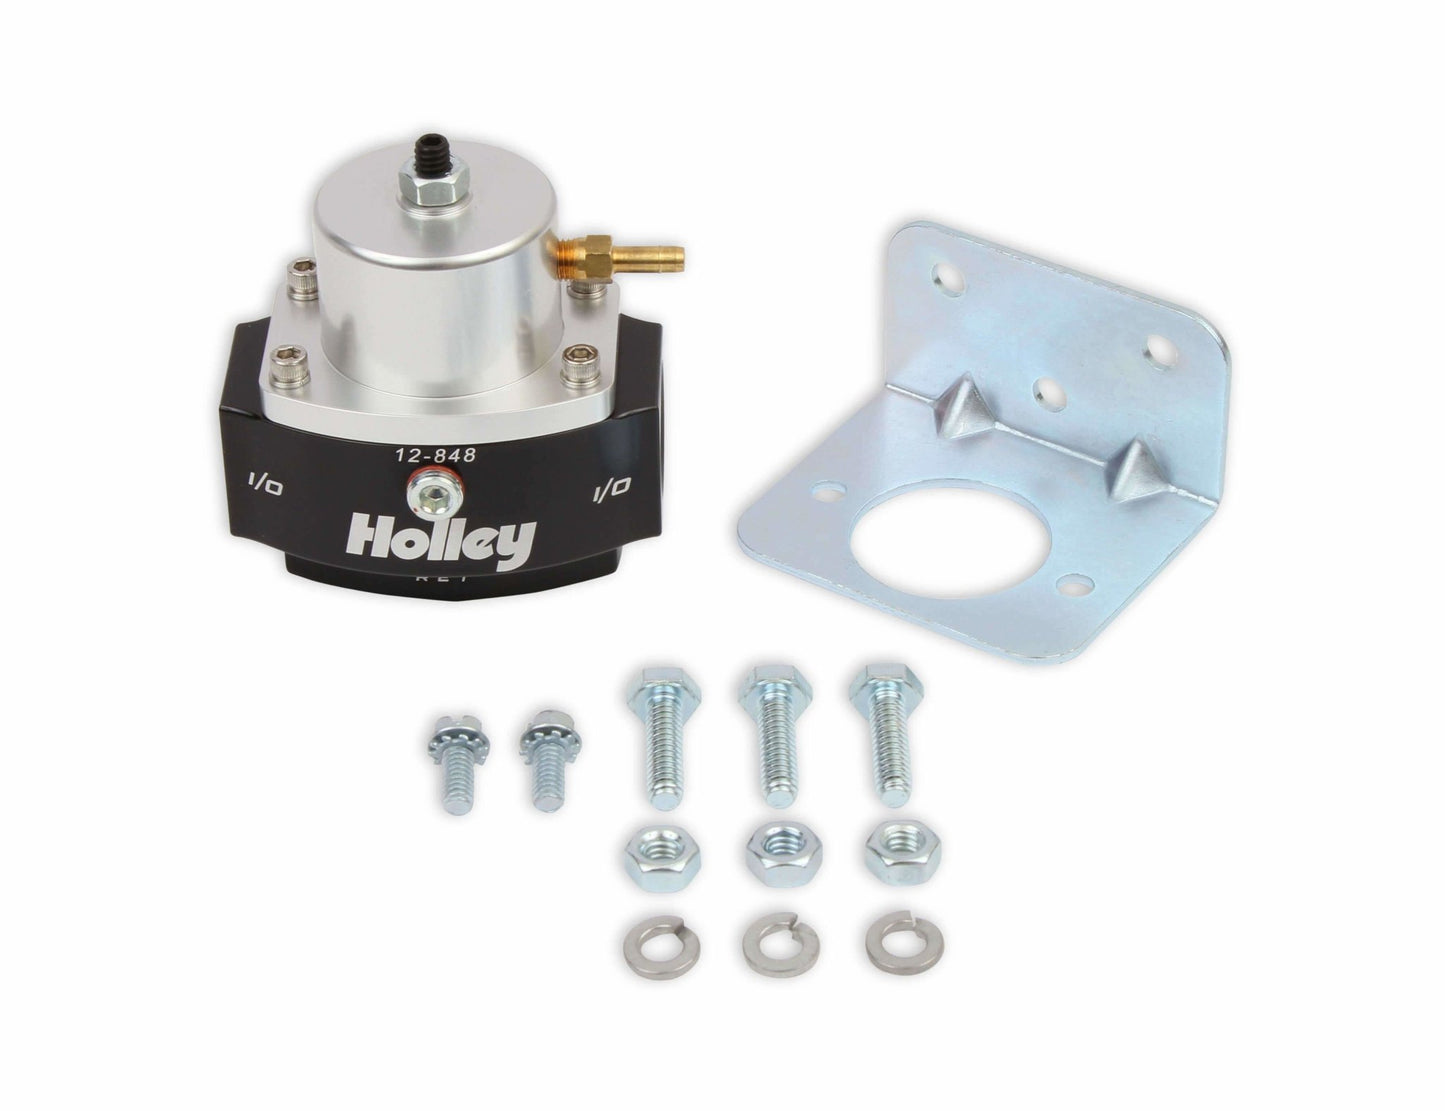 Holley Performance Fuel Pressure Regulator 12-848 - Hot Rod fuel hose by One Guy Garage